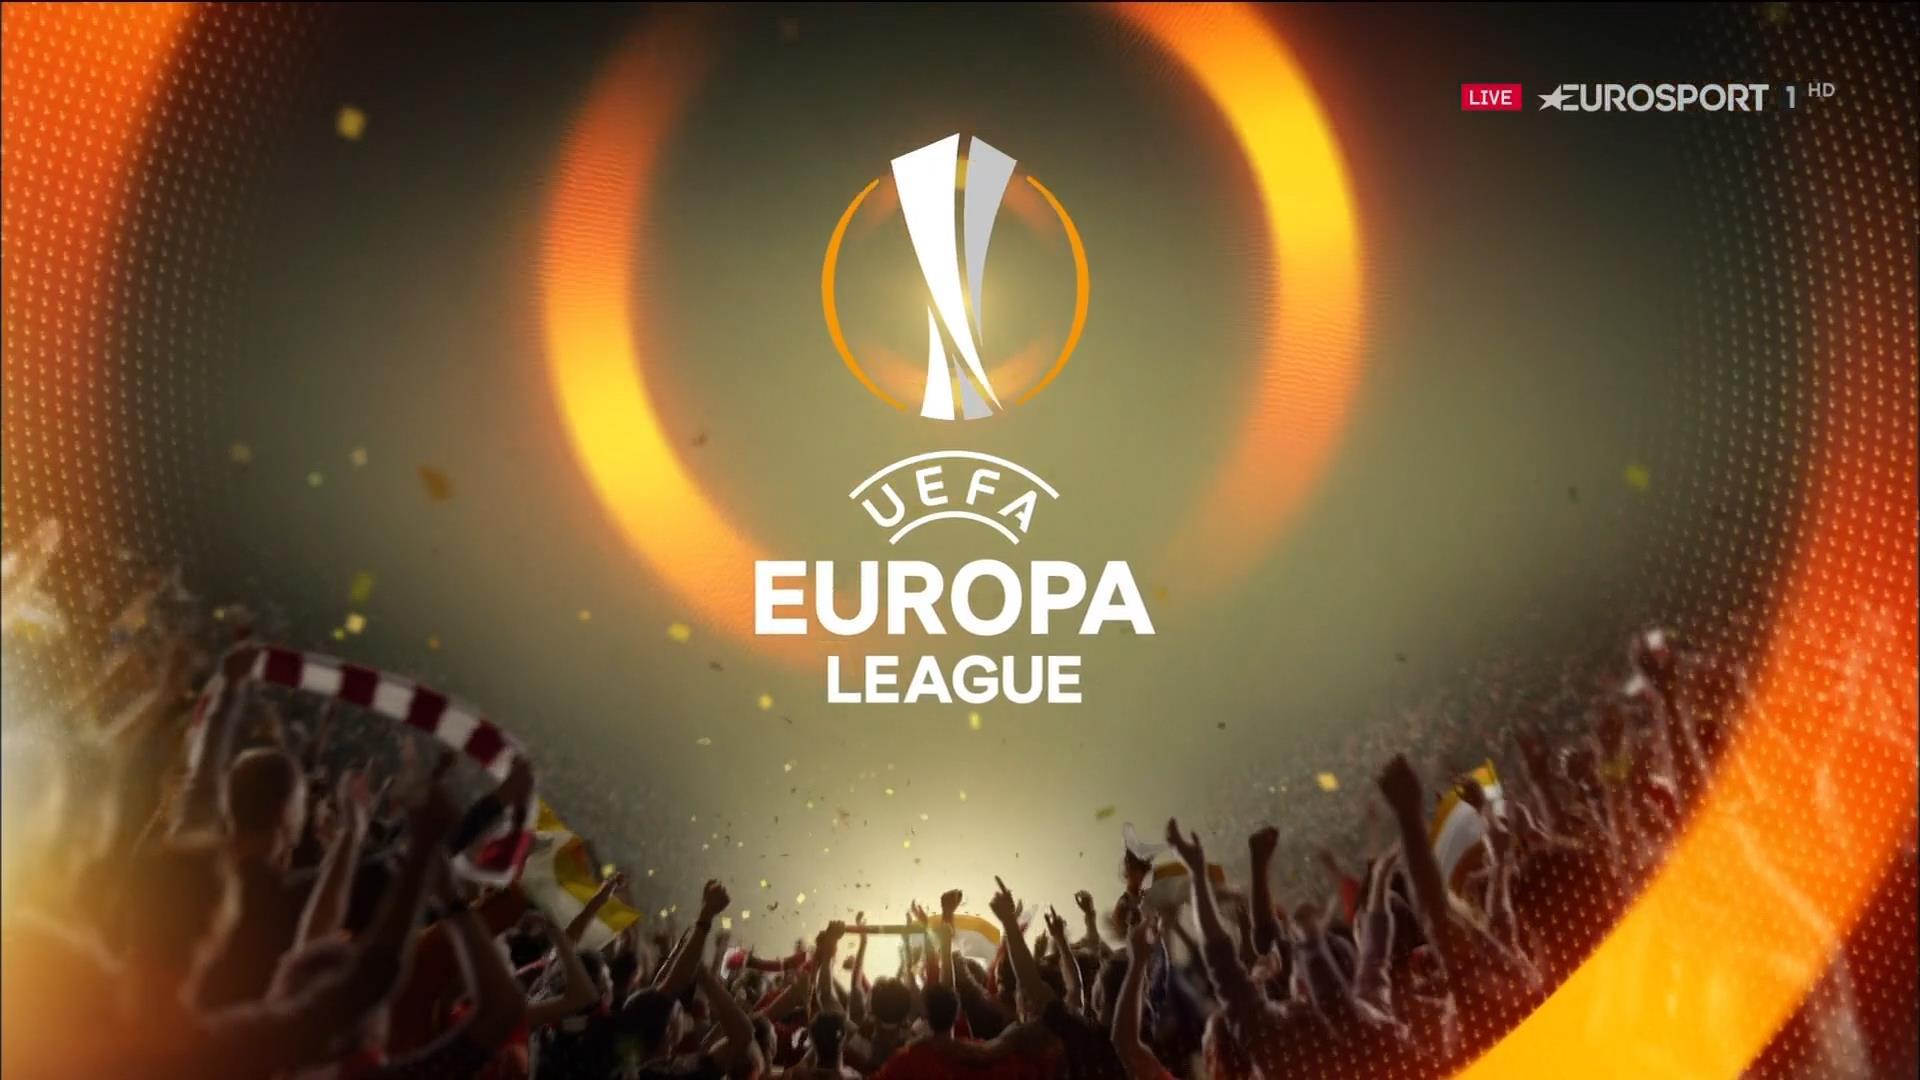 UEFA Europa League Wallpapers - Wallpaper Cave